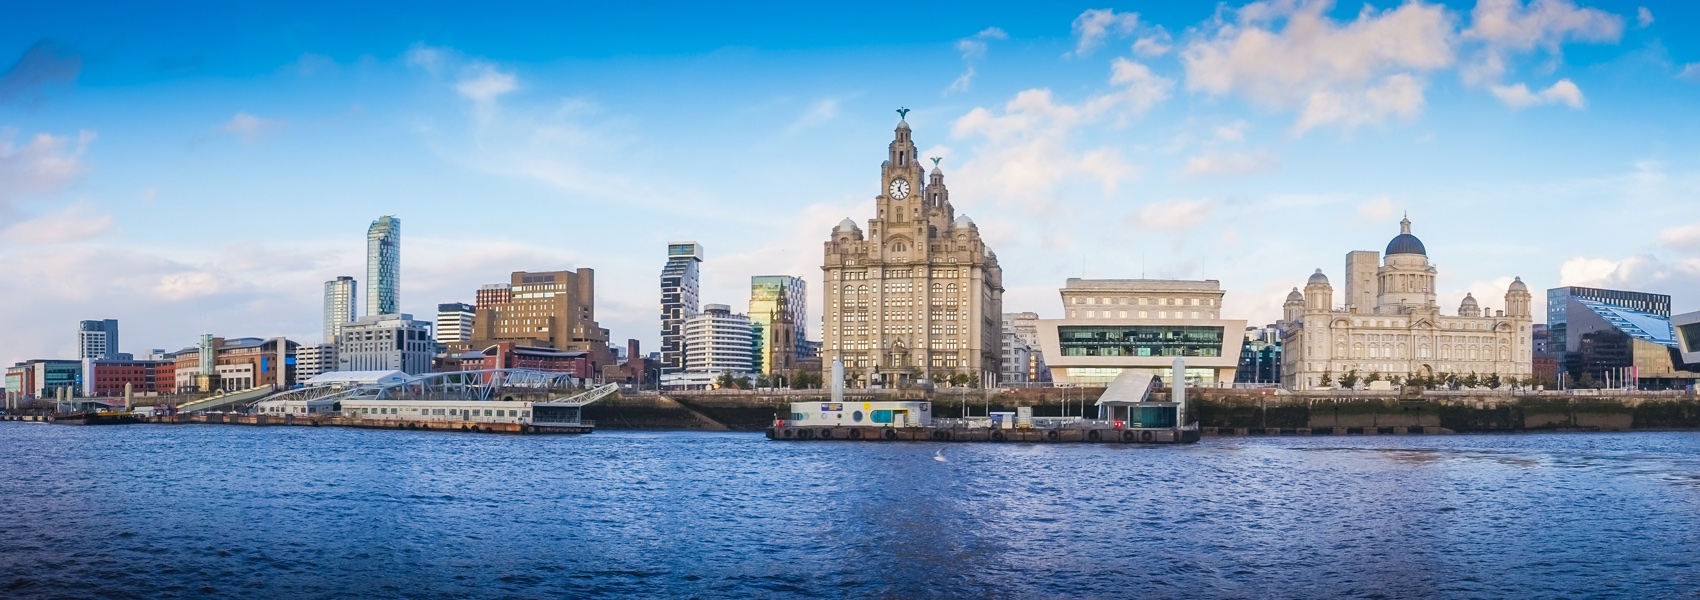 Panorama de Liverpool